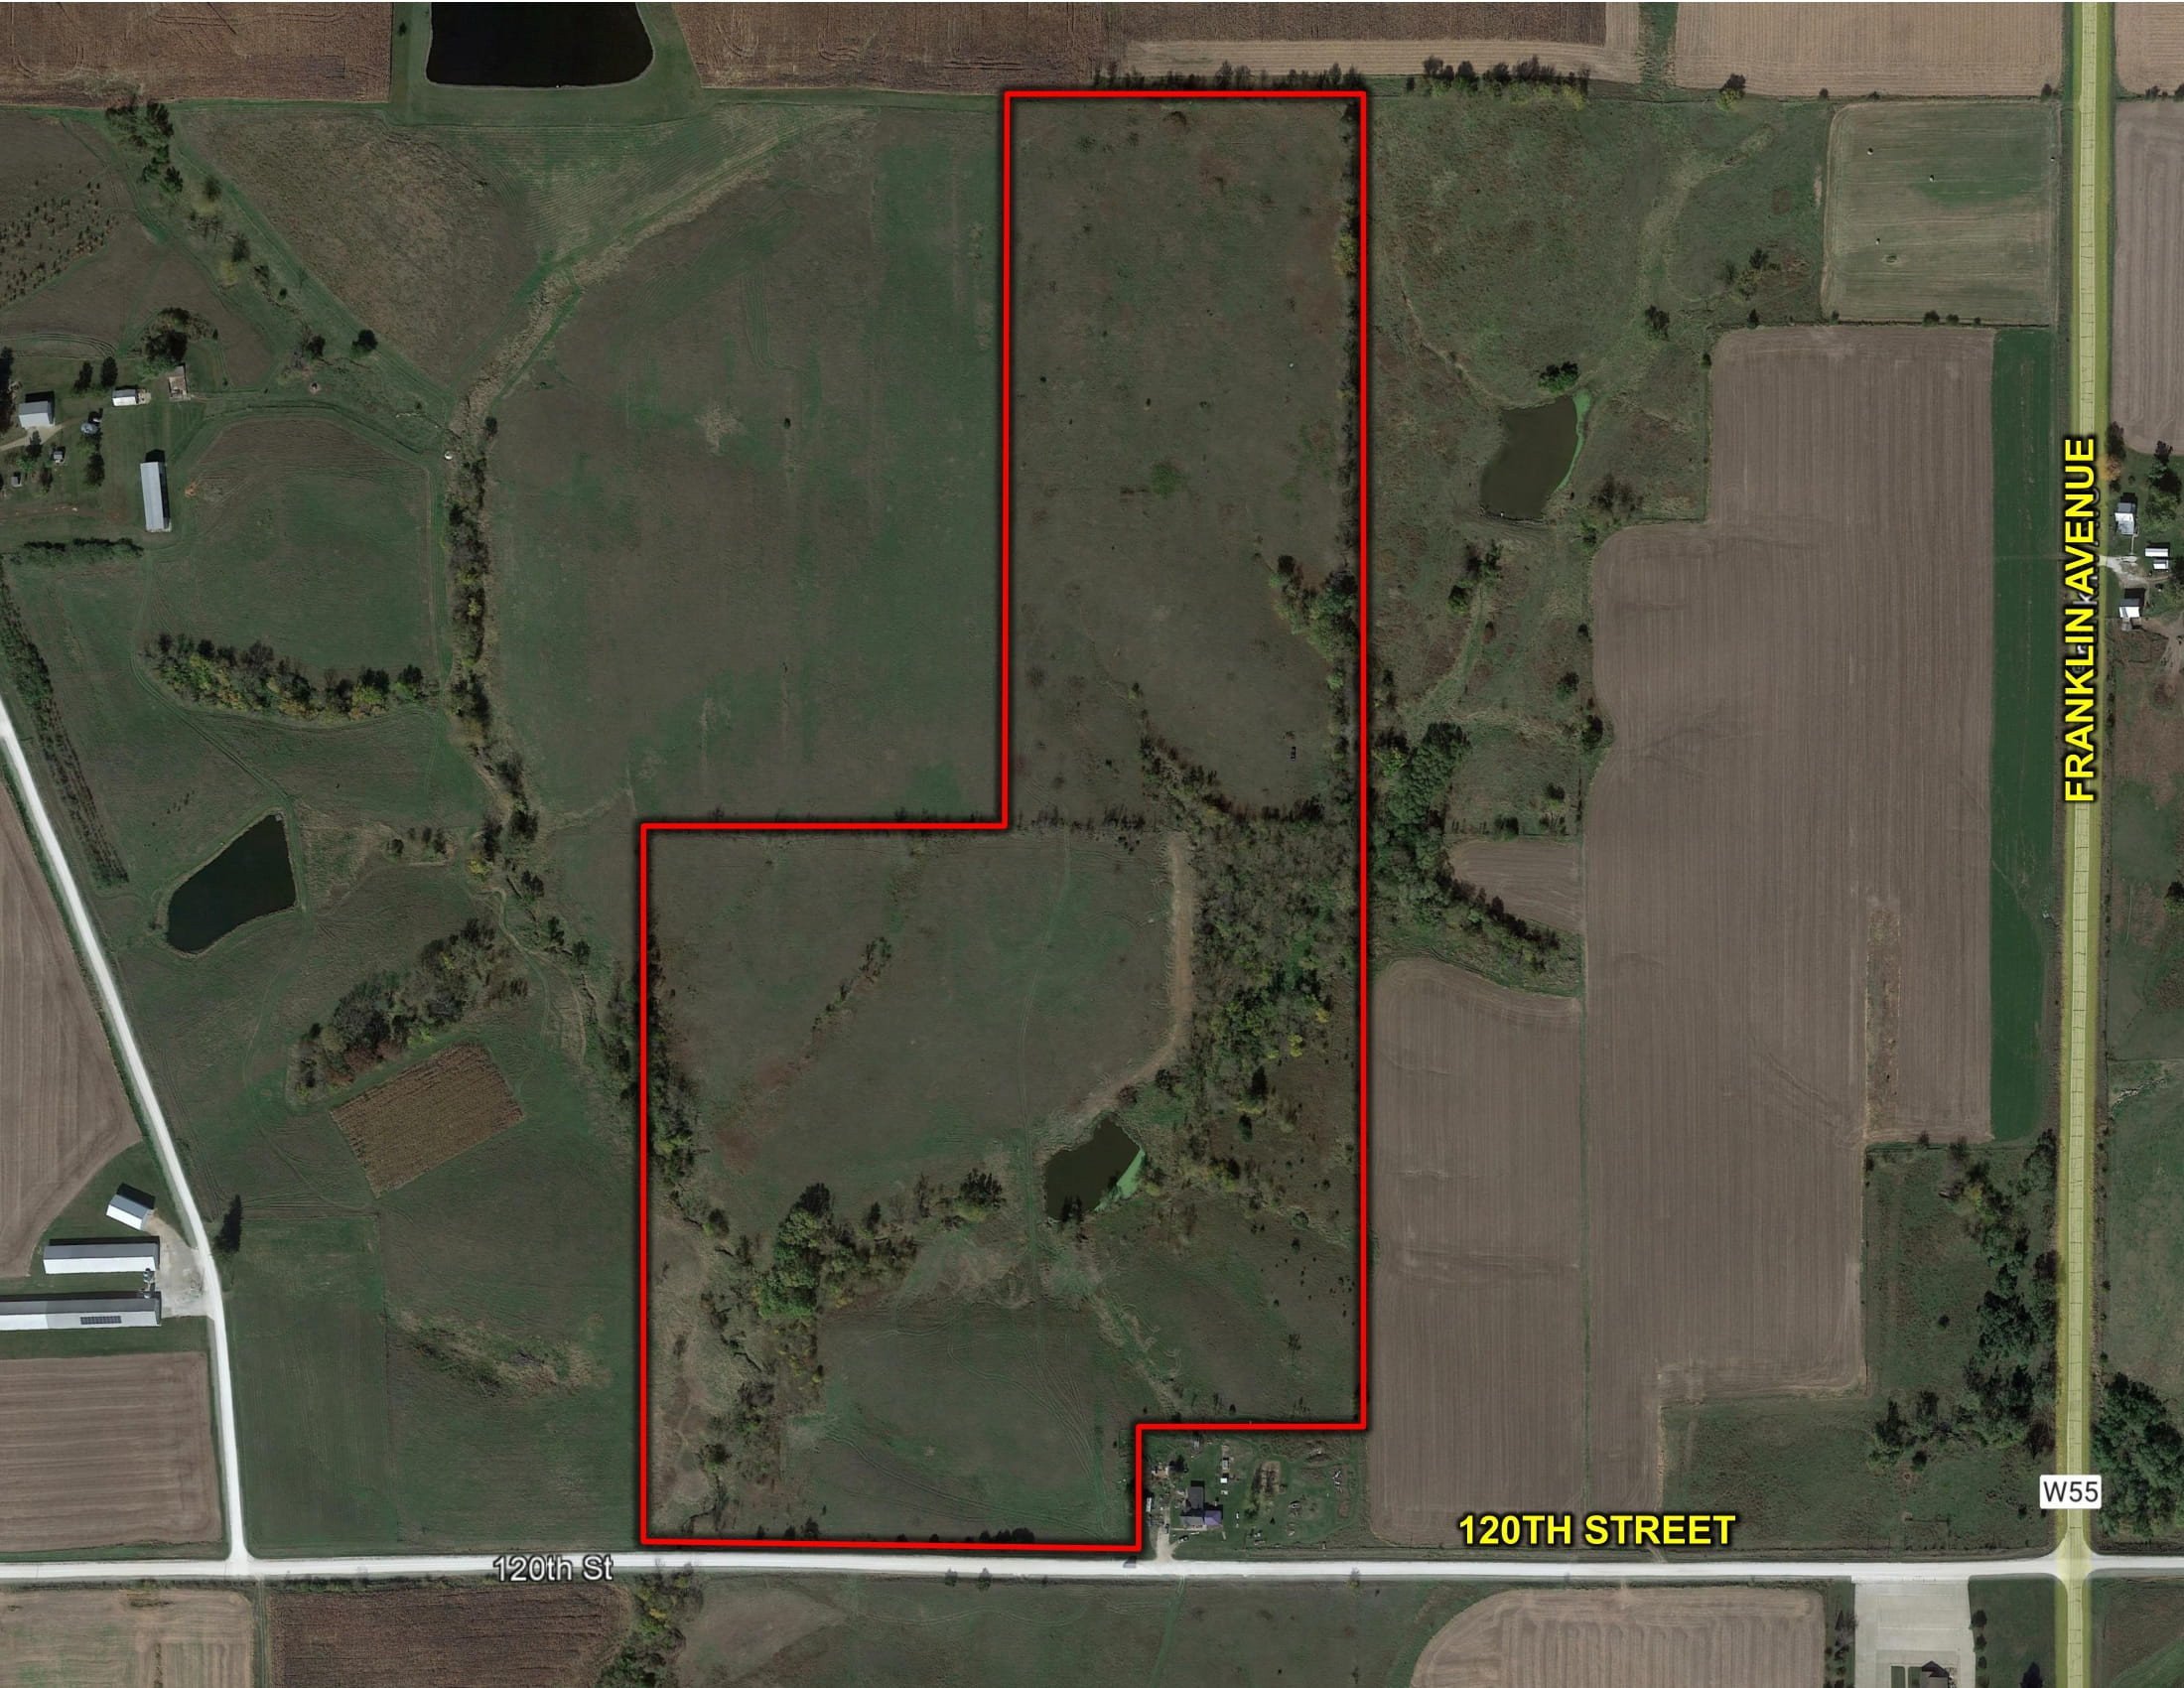 land-henry-county-iowa-57-acres-listing-number-16658-16293-photo-land-henry-county-iowa-57-acres-listing-number-16293-maps-02-4jpg-11.jpg